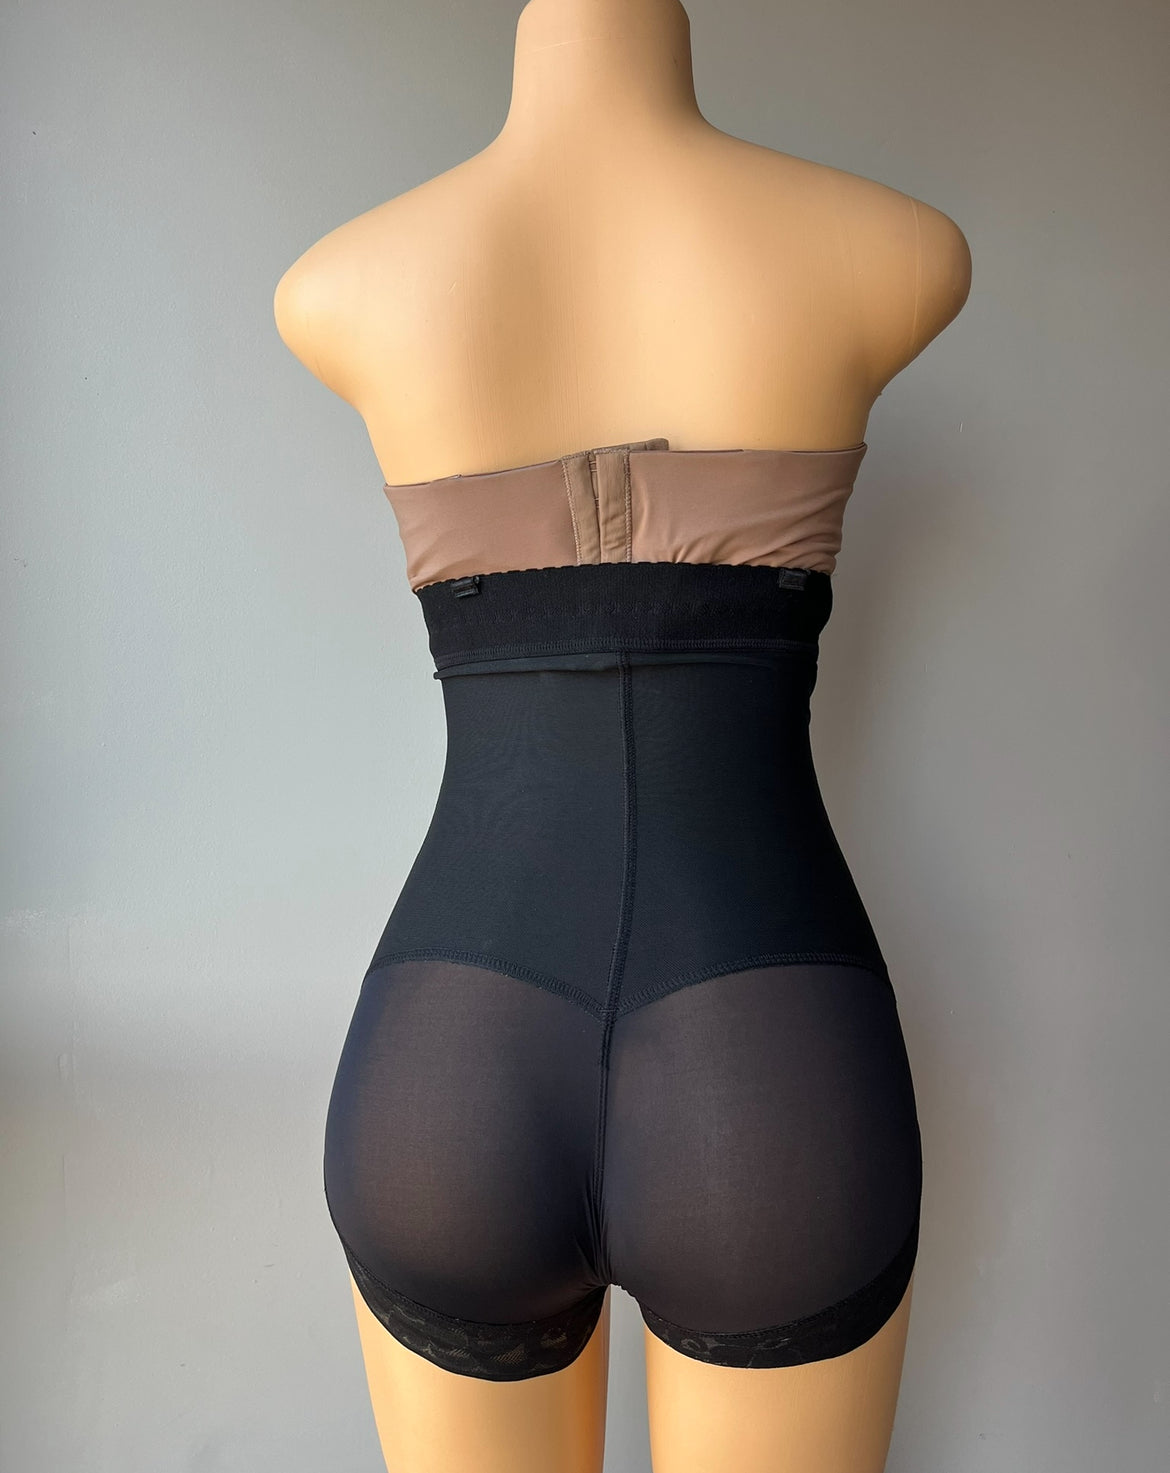 Secret strapless pantie style with zipper